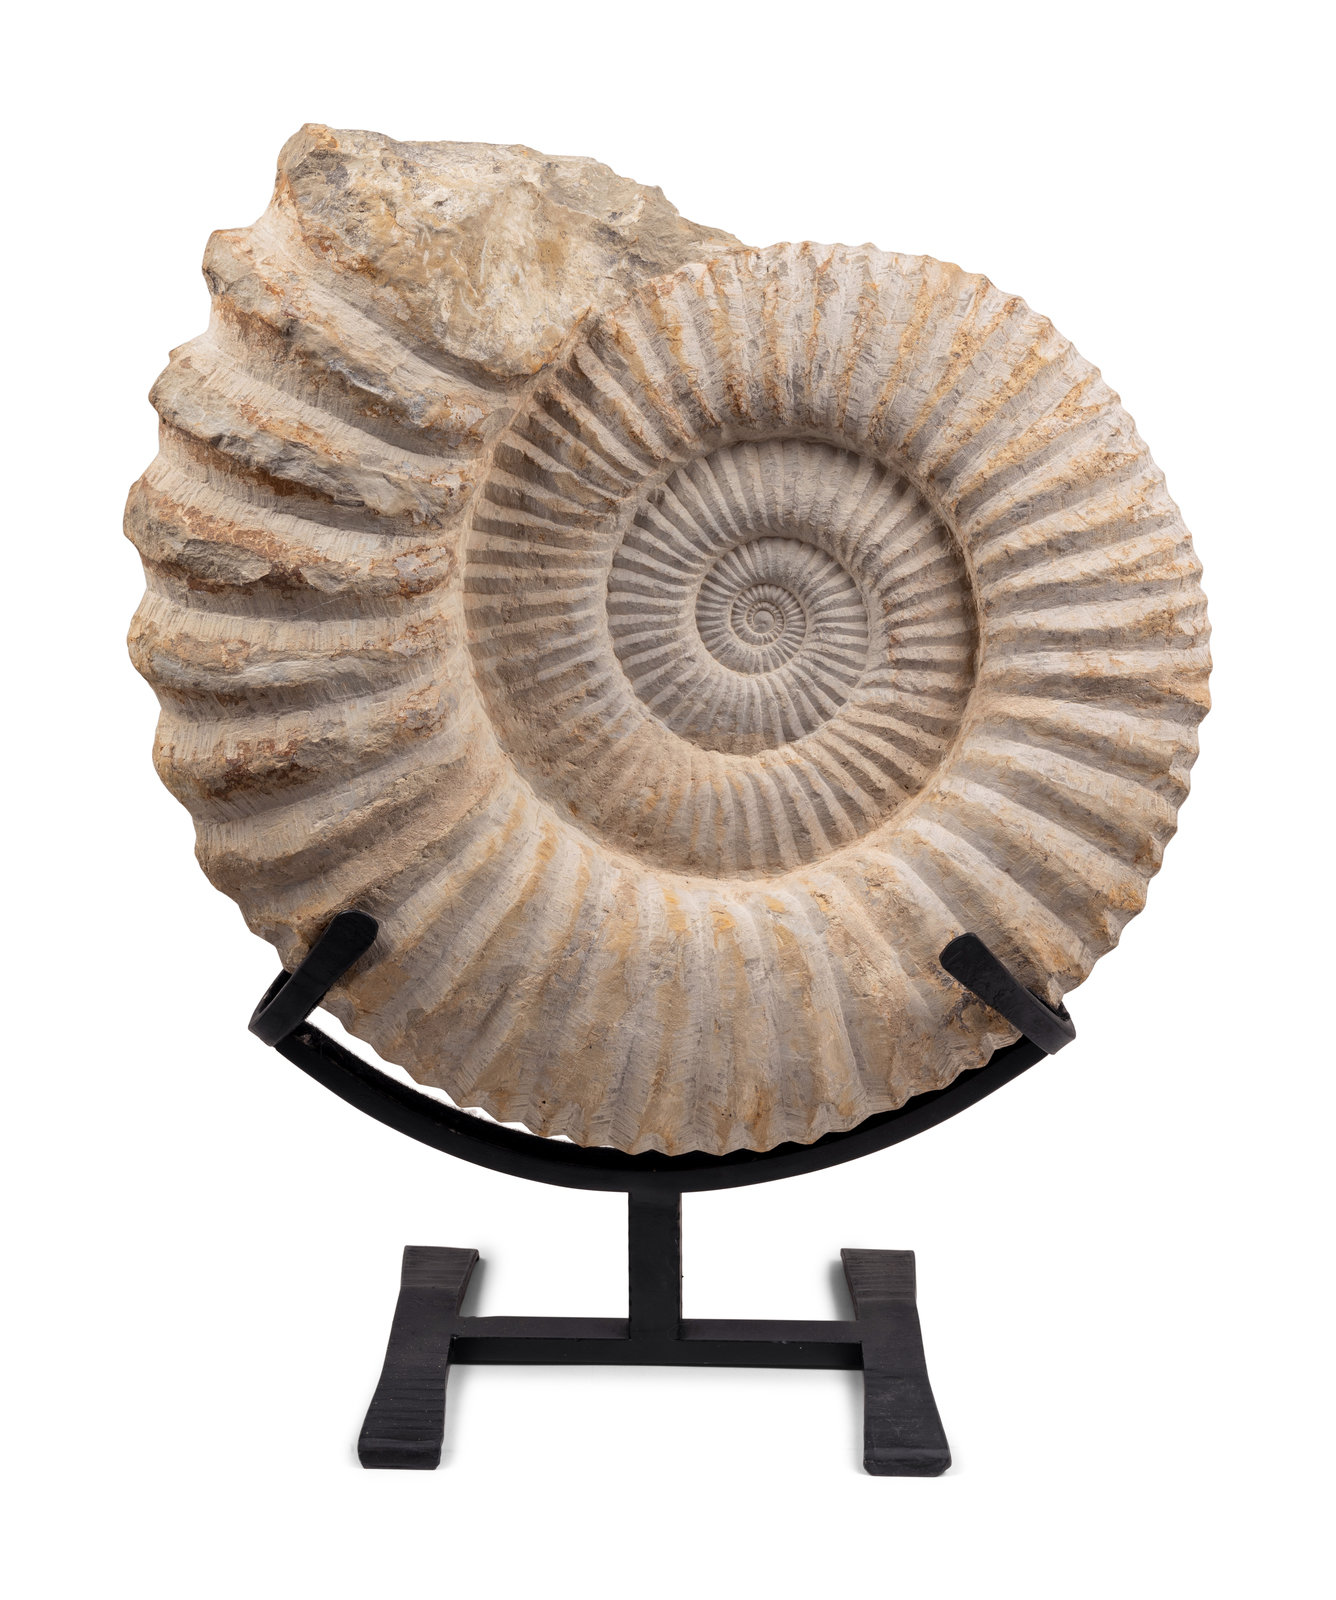 A Large Mounted Nautilus Fossil Specimen